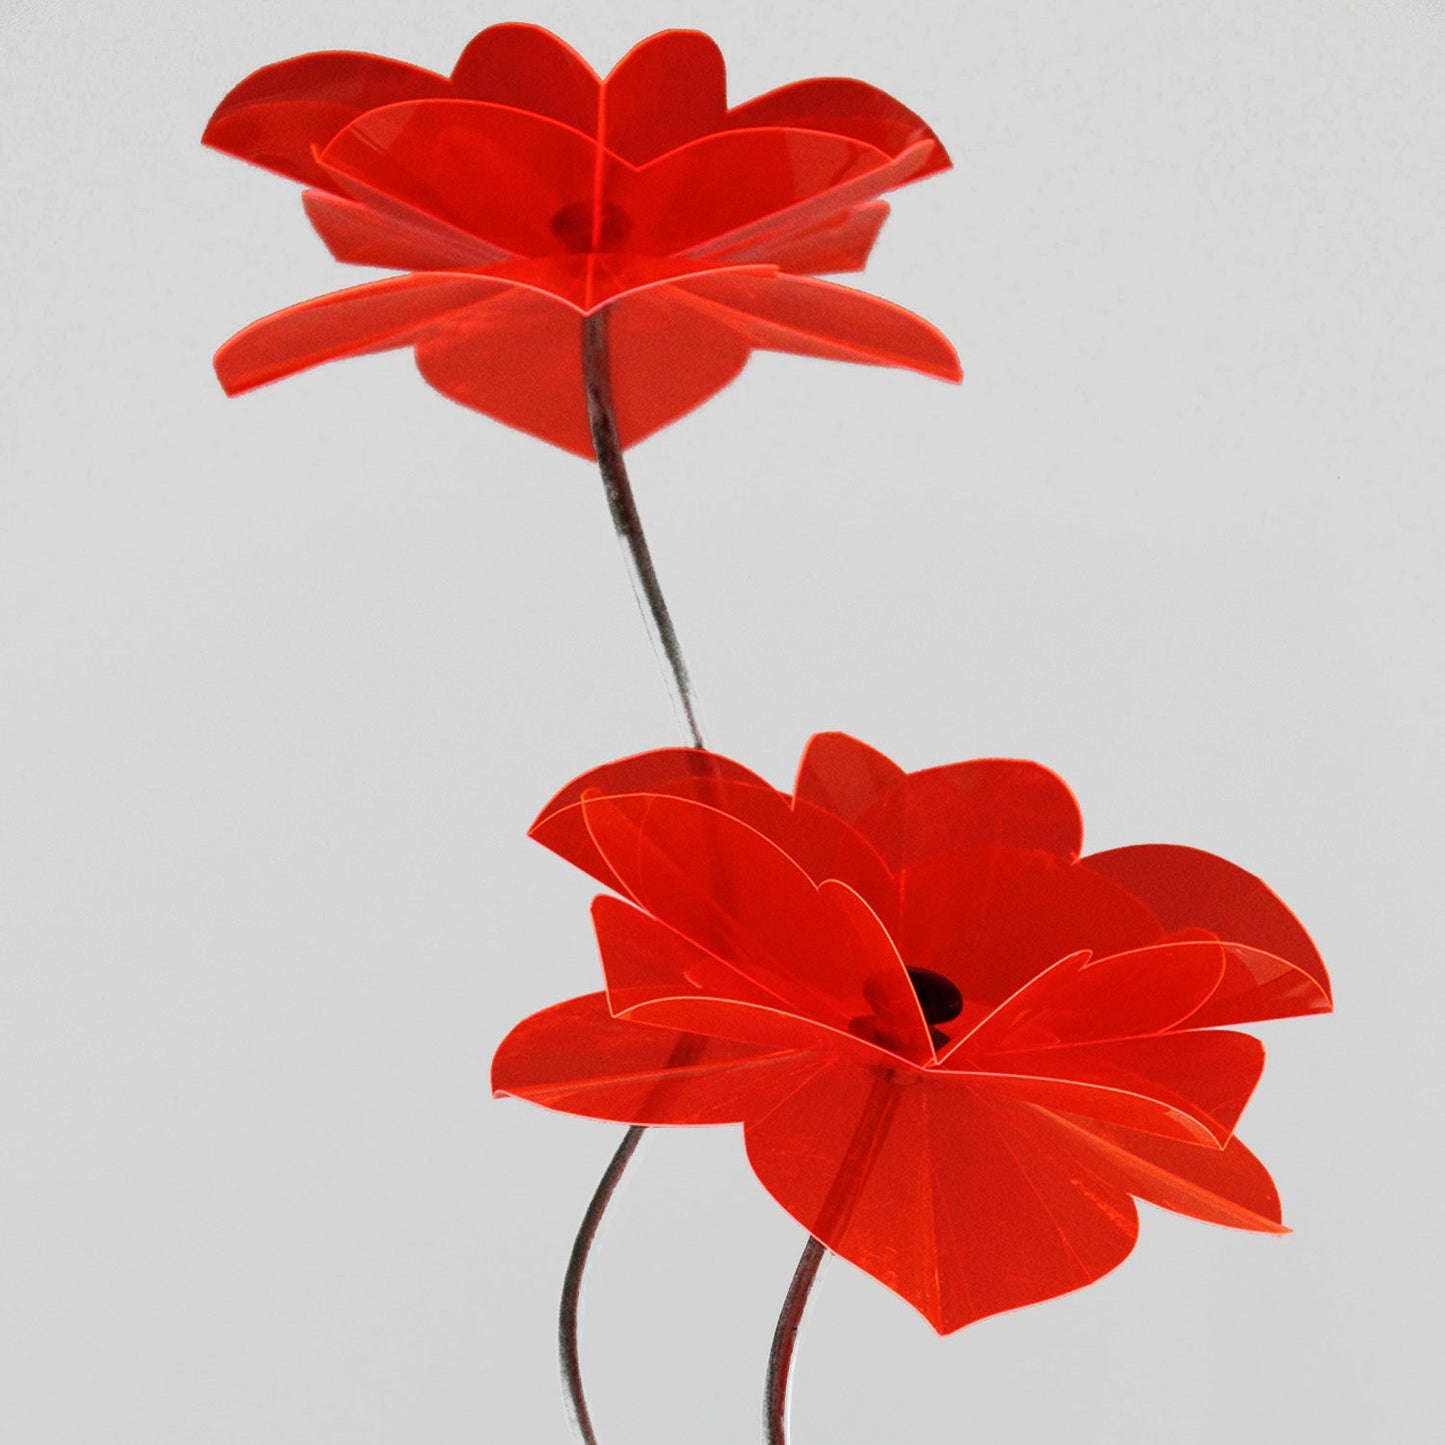 Poppy Flower Skewed 30- 40 cm, flower ca 12 cm diam, all individual